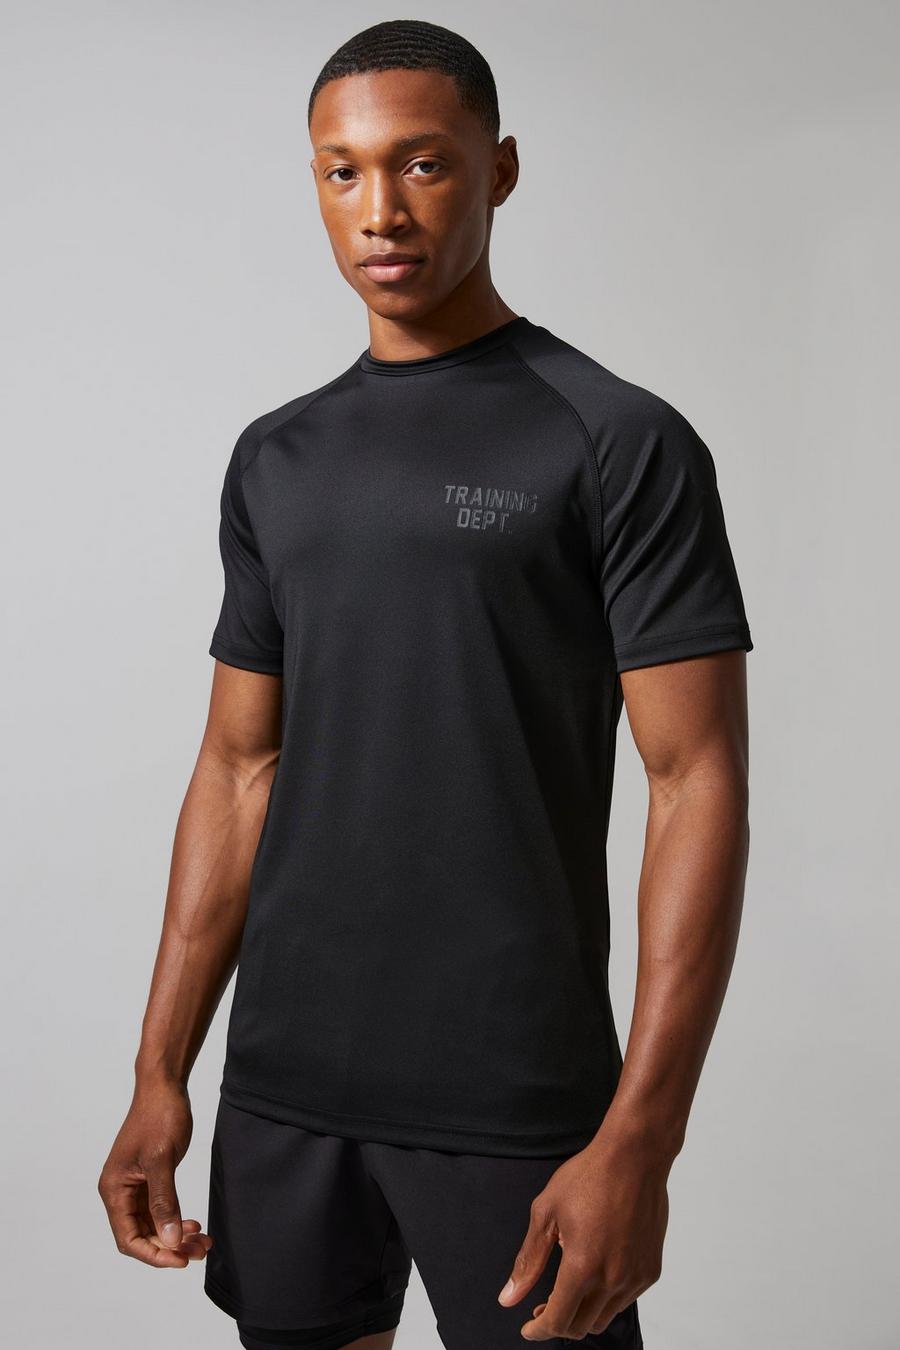 Black Man Active Muscle Fit Training Dept T-Shirt